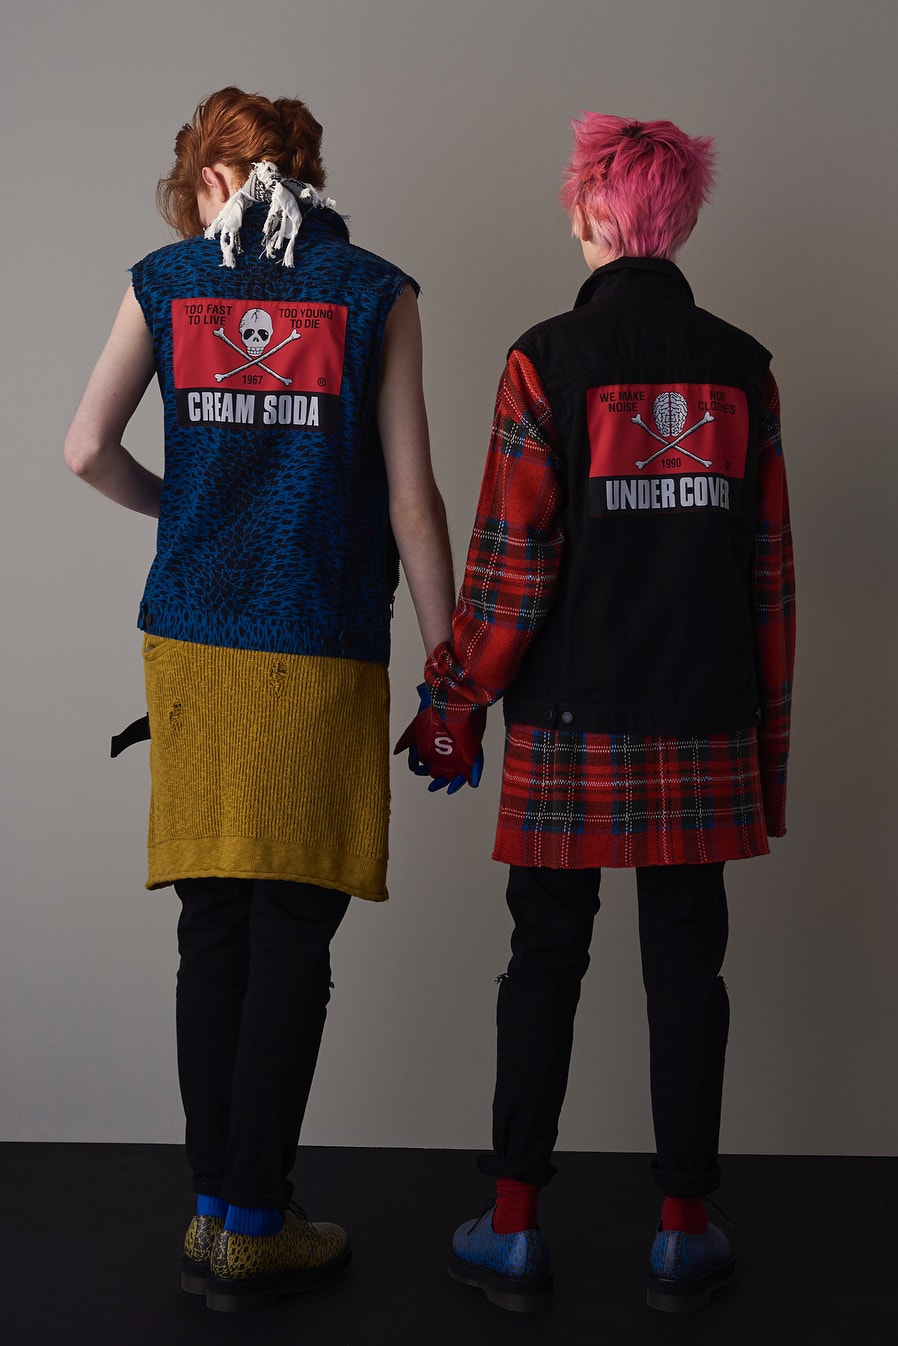 UNDERCOVER x Cream Soda Collaboration Collection Dropping March 24 Harajuku Jun Takahashi collaboration lookbook punk fashion streetwear